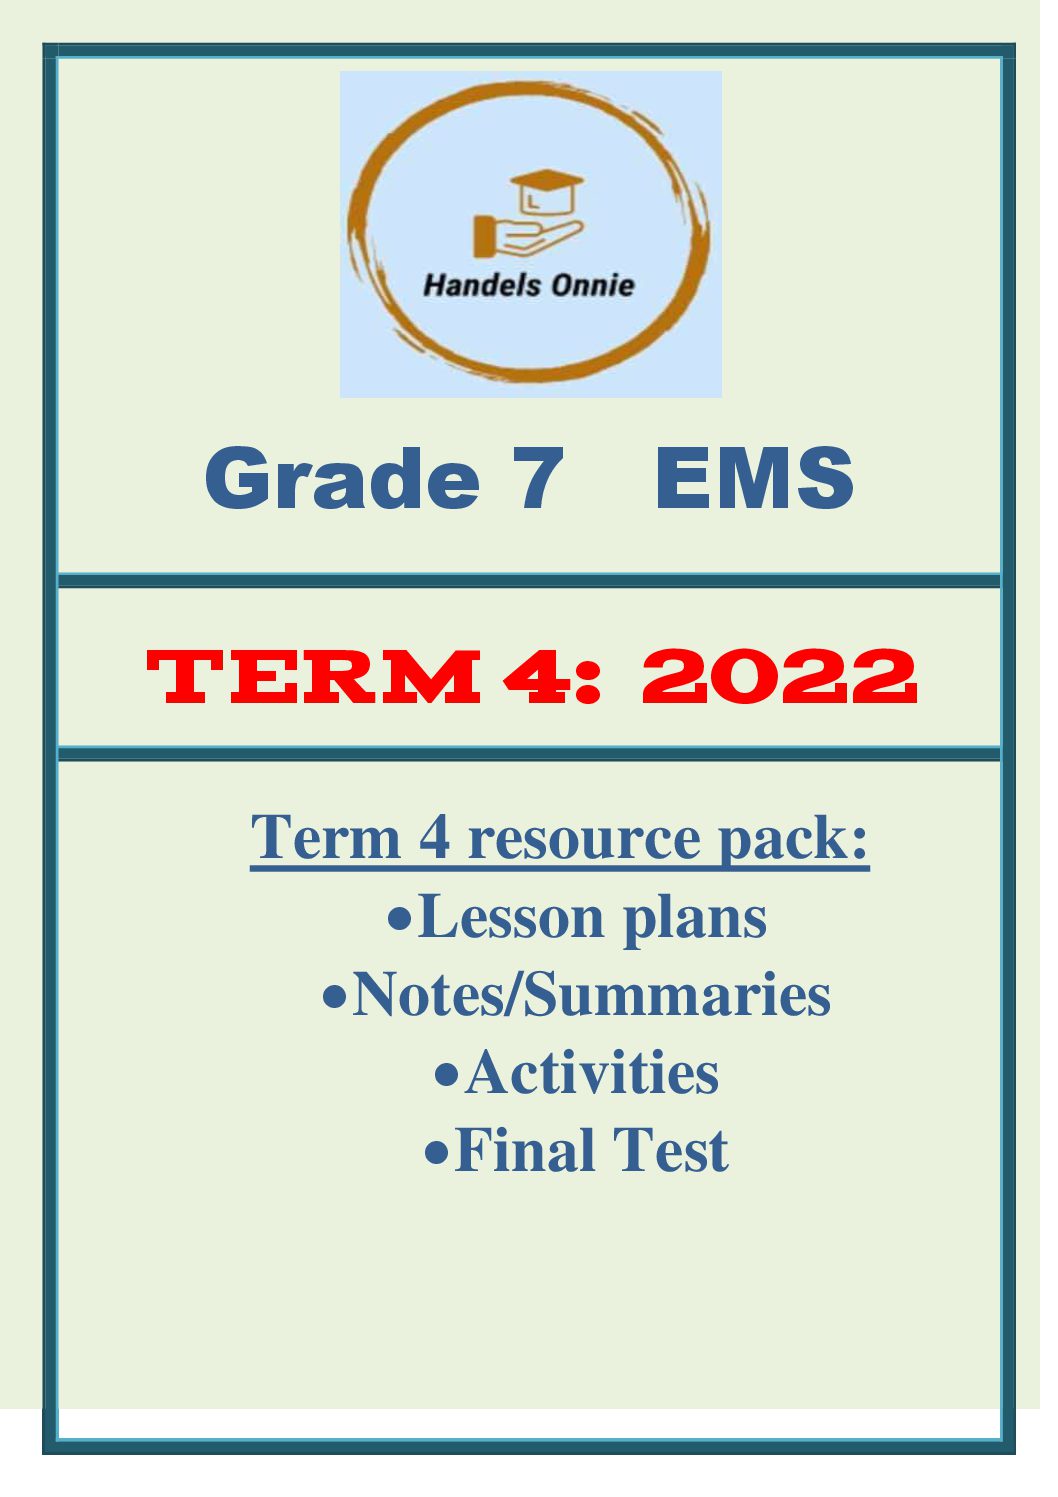 grade 9 ems business plan project pdf